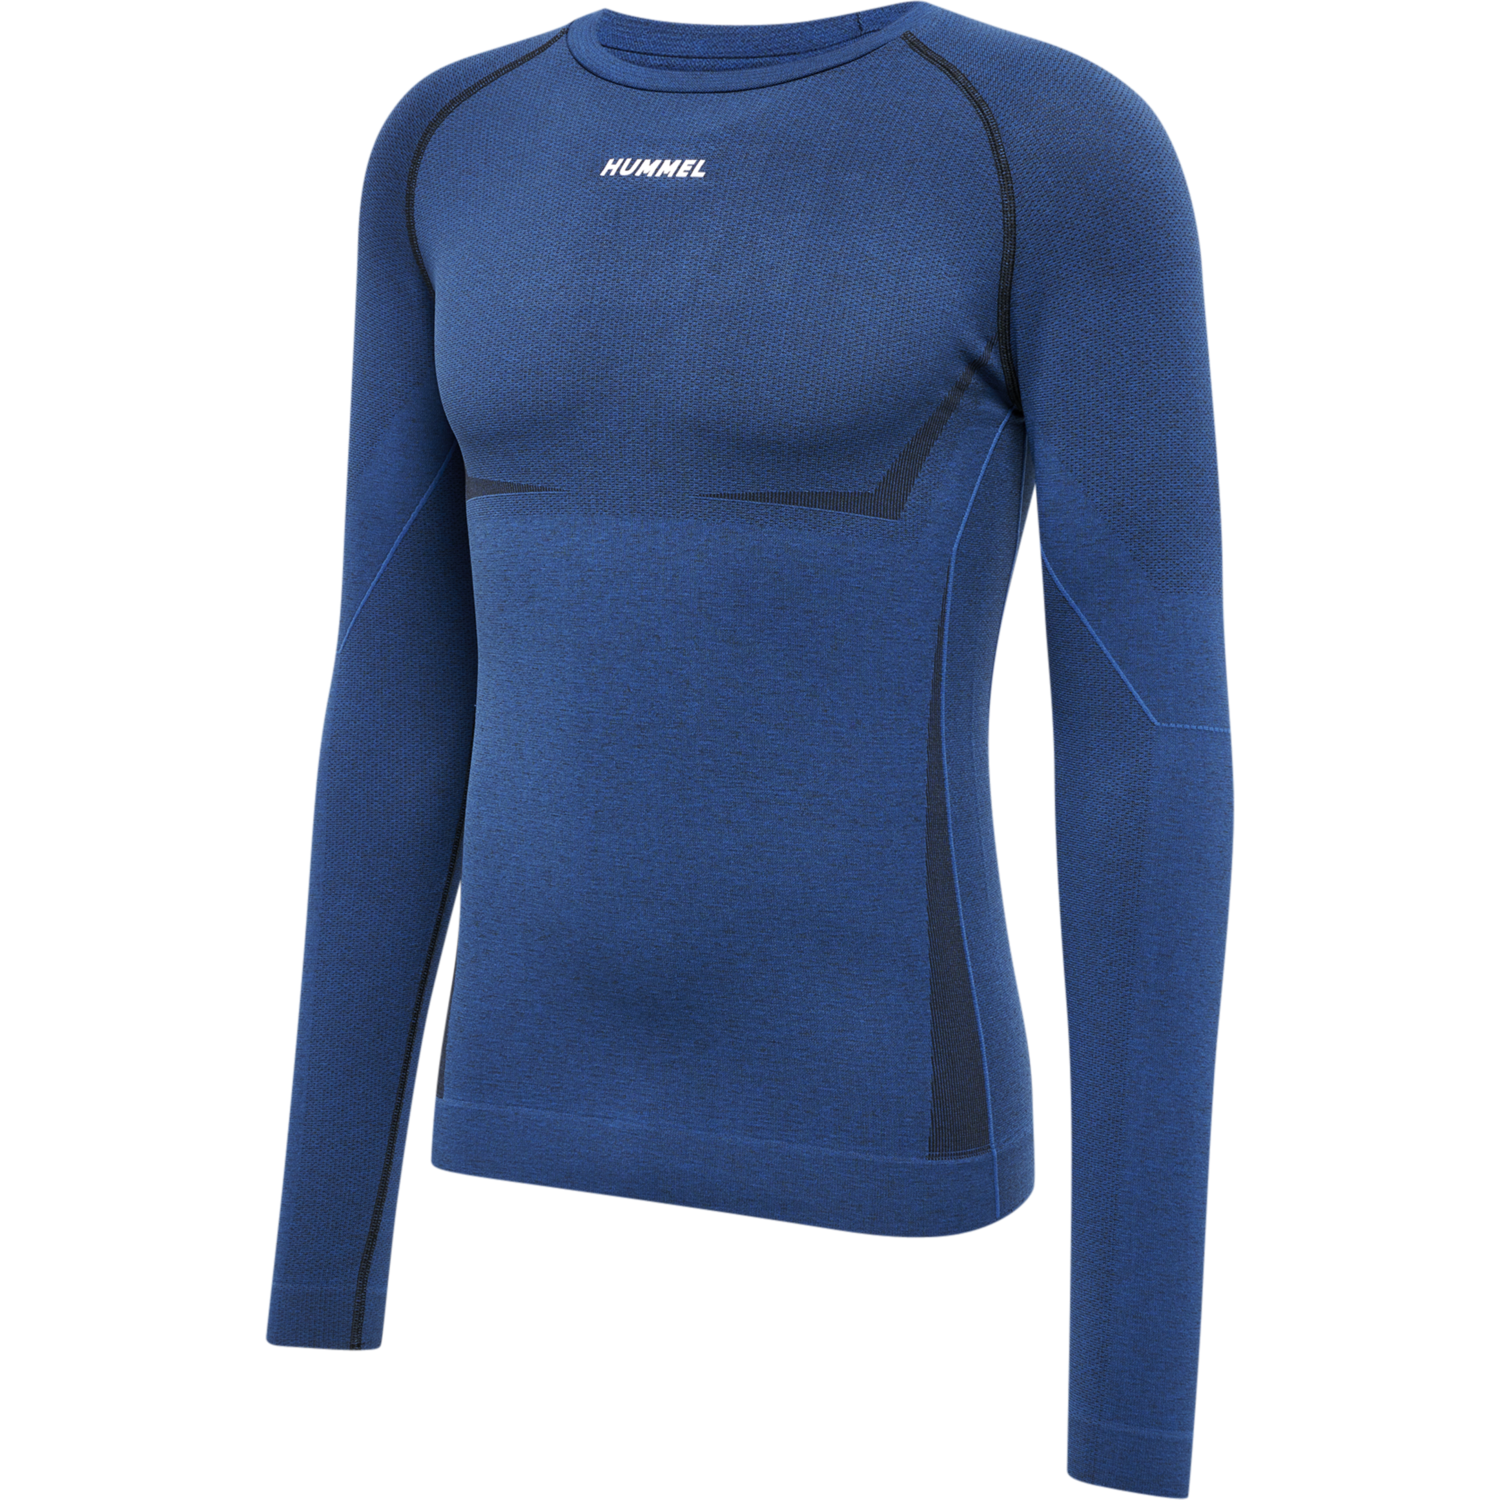 Details about   Hummel Core Mens Football Sports Training Workout Long Sleeve Jersey Shirt Top 